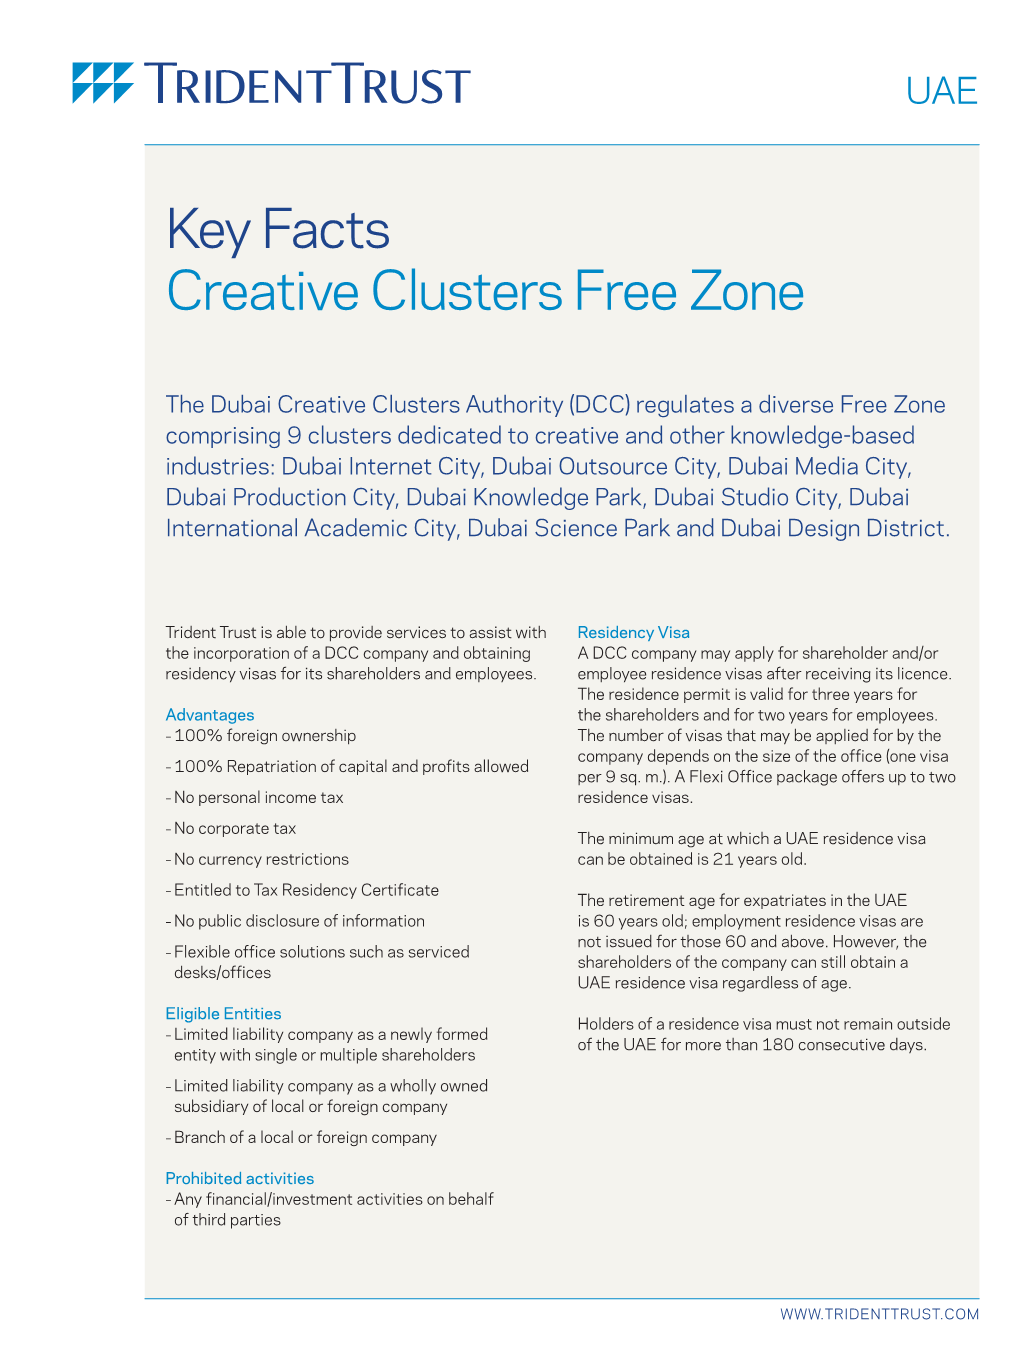 Dubai Creative Clusters Authority Key Facts